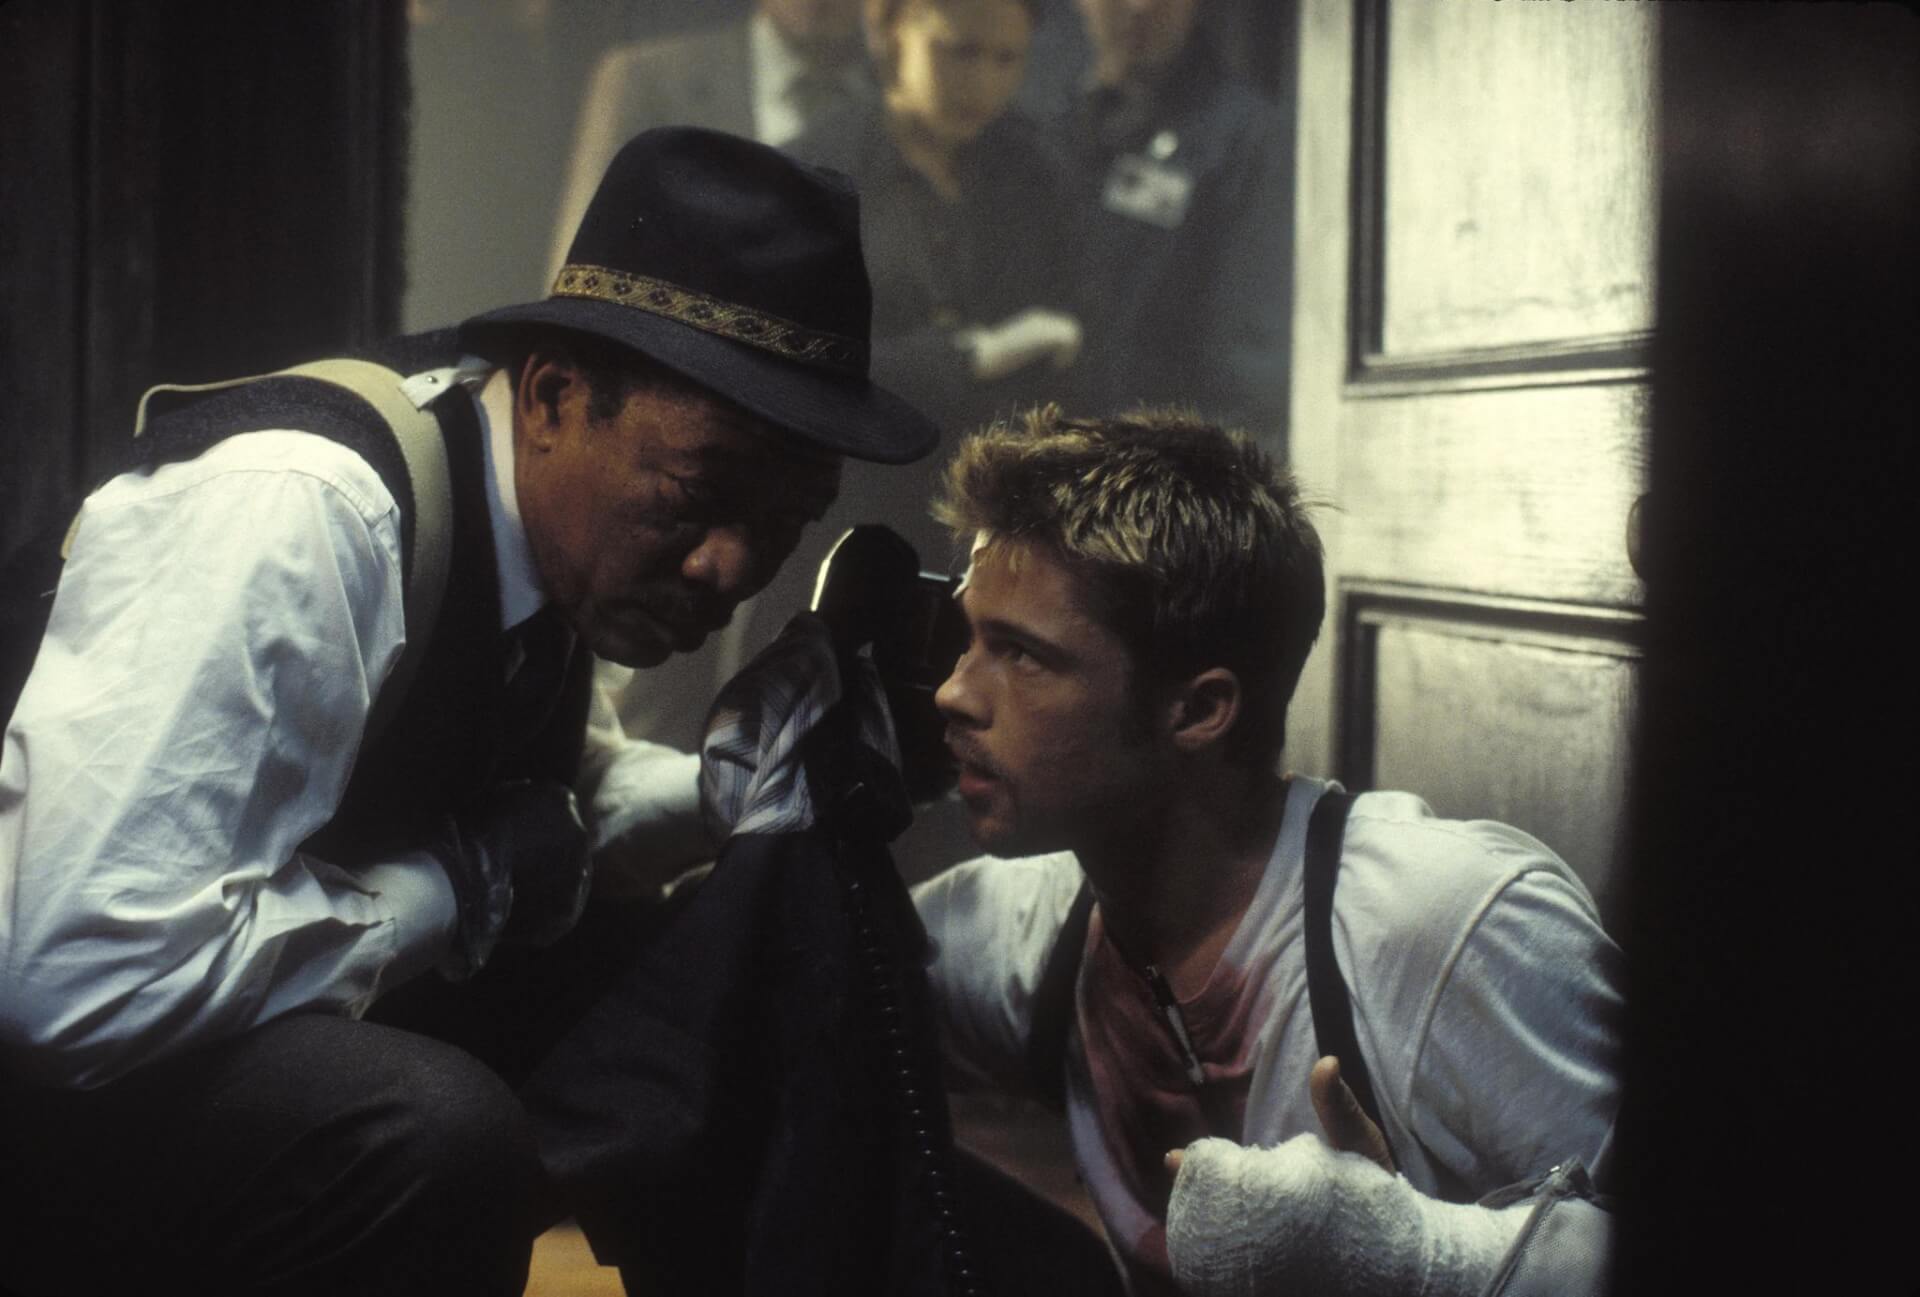 Seven William Somerset Morgan Freeman and David Mills Brad Pitt